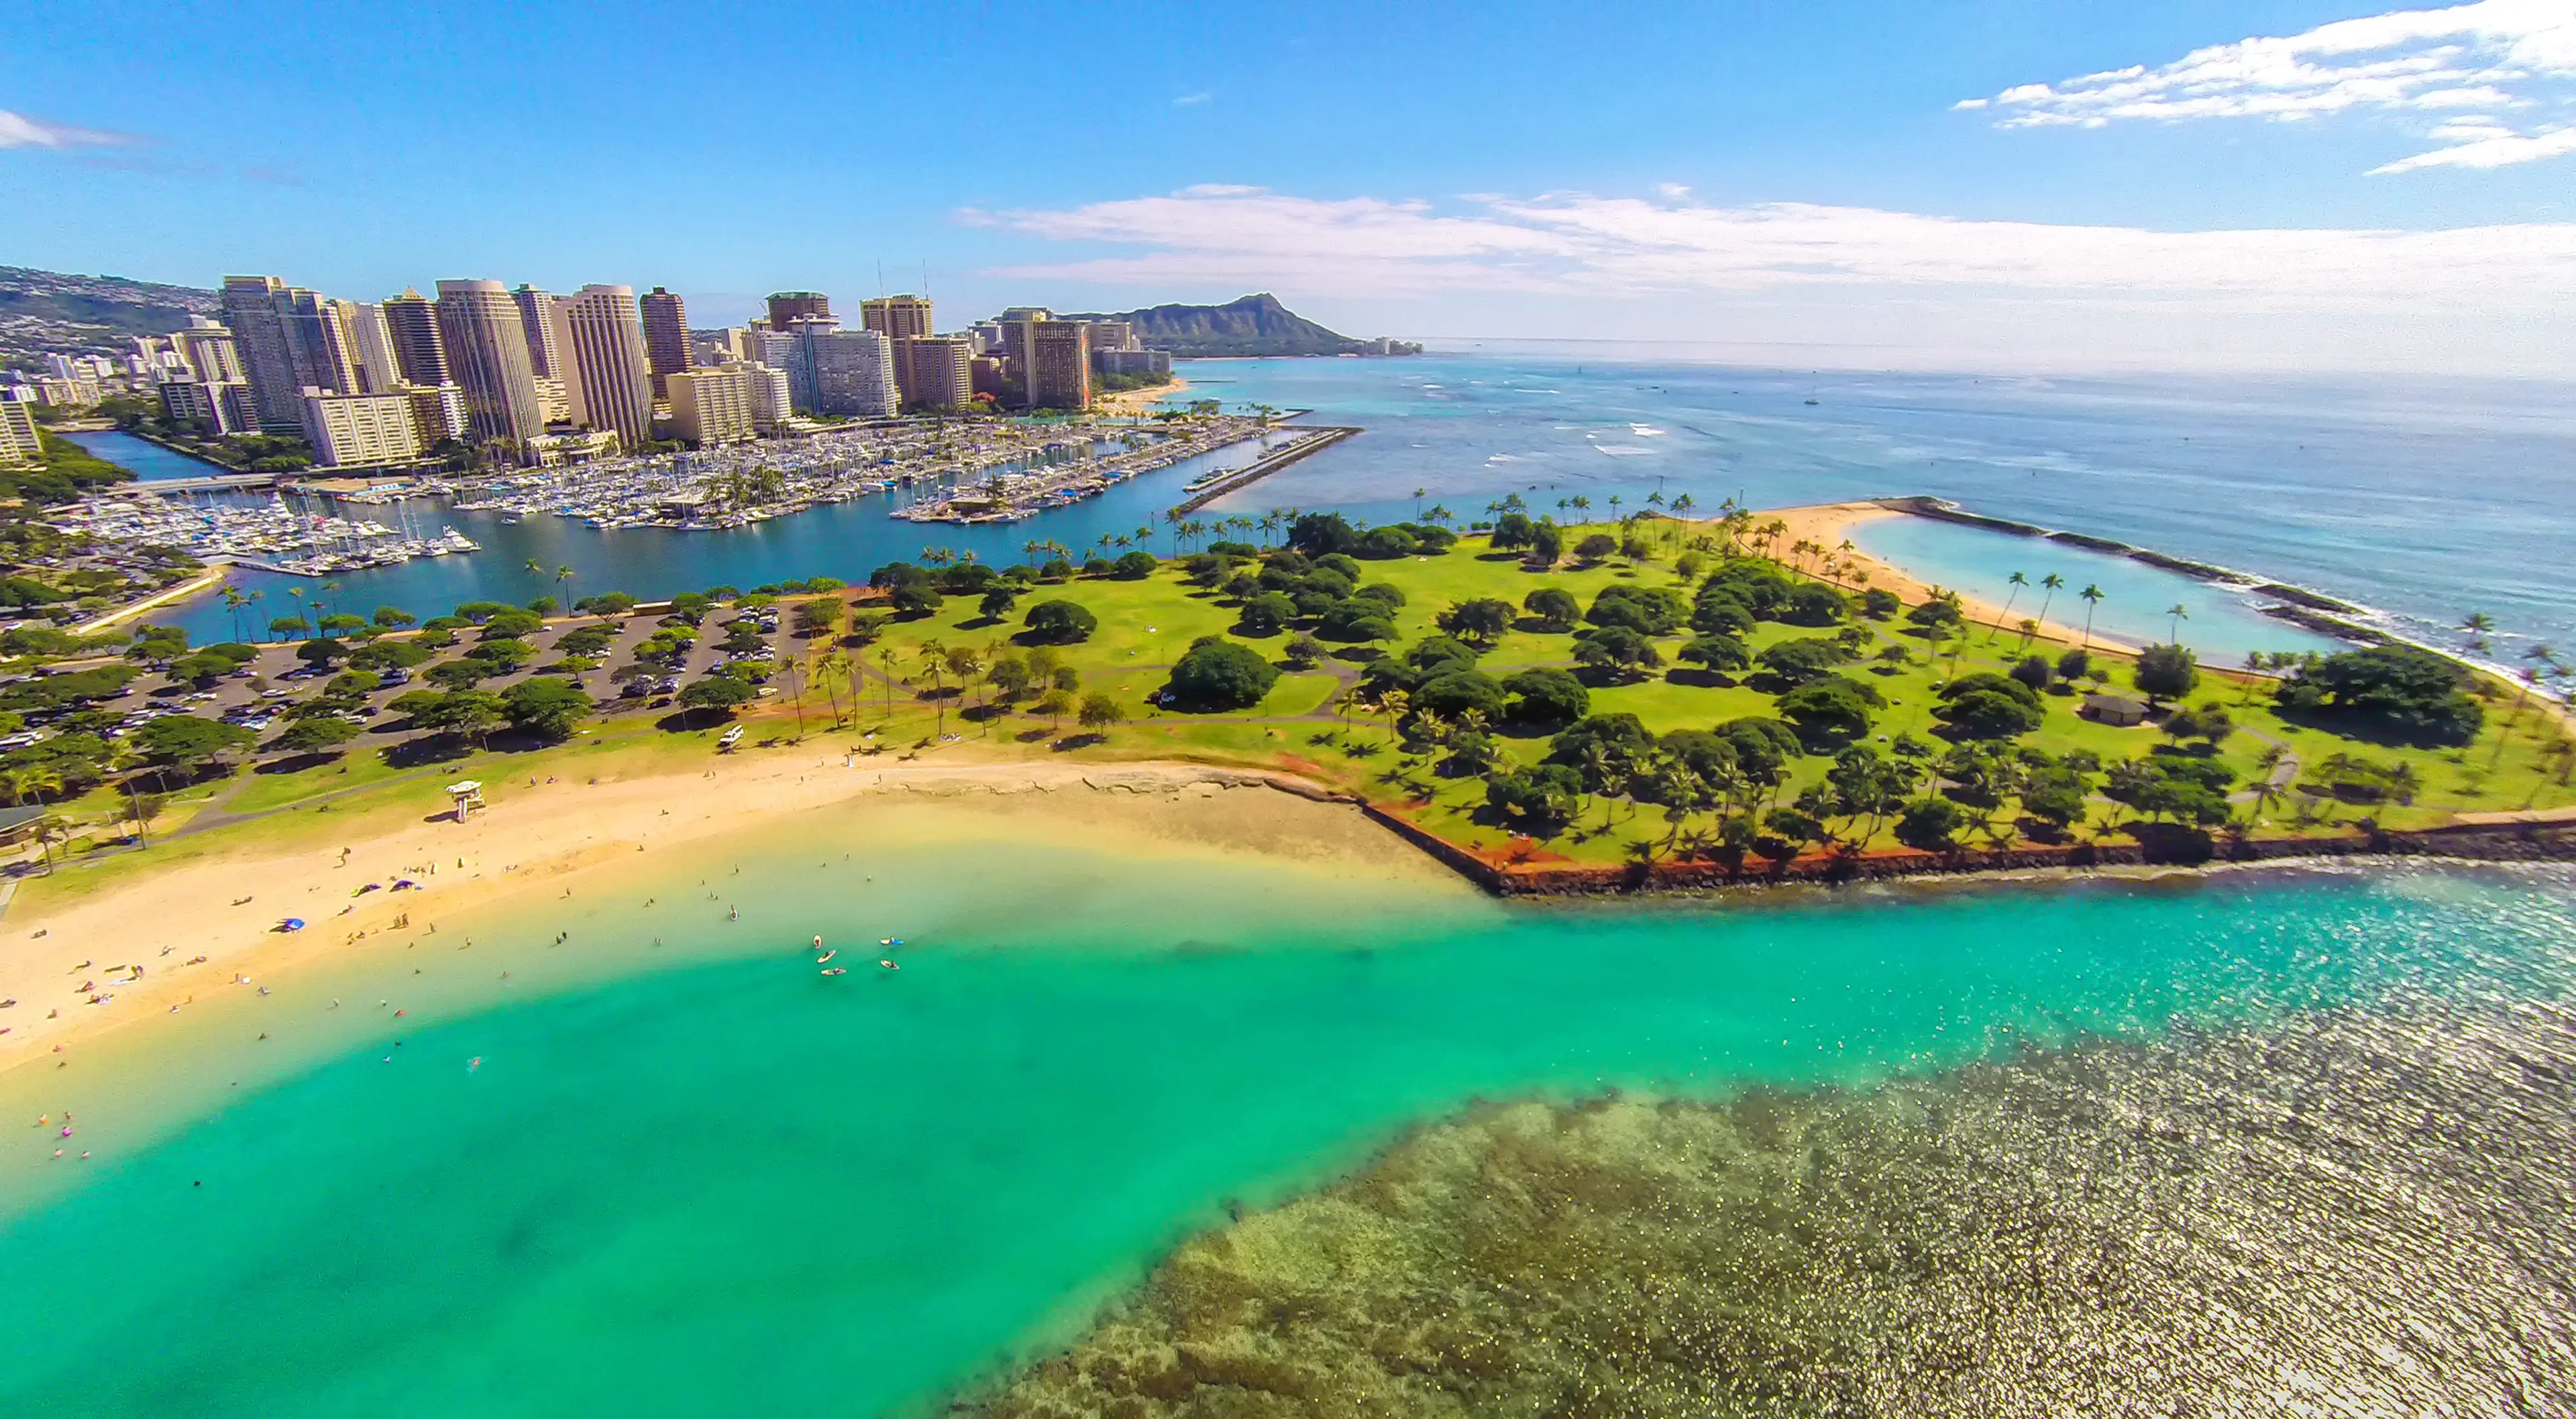 Magic Island Beach Park, Waikiki hotels, and Diamond Head